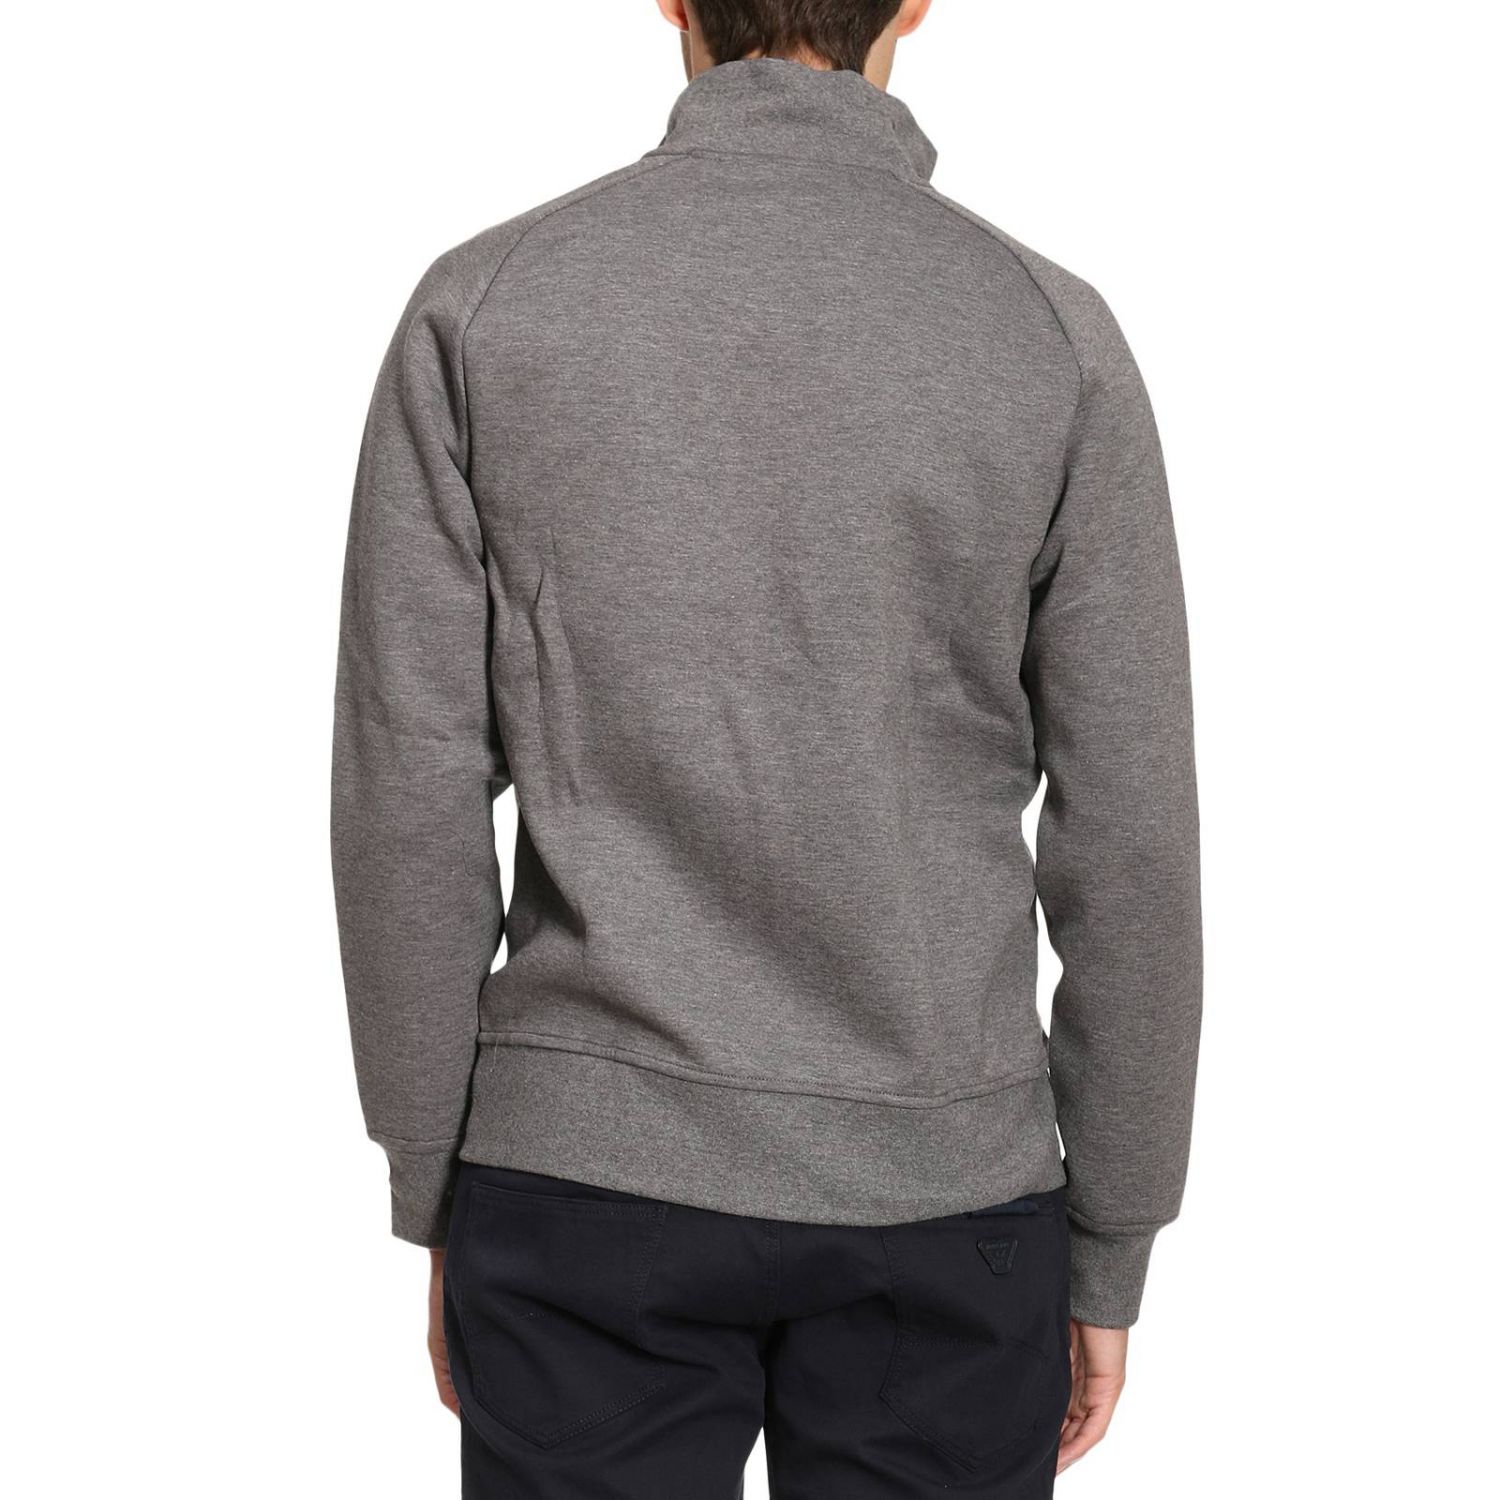 Polo Ralph Lauren Outlet: Sweater men | Sweatshirt Polo Ralph Lauren ...